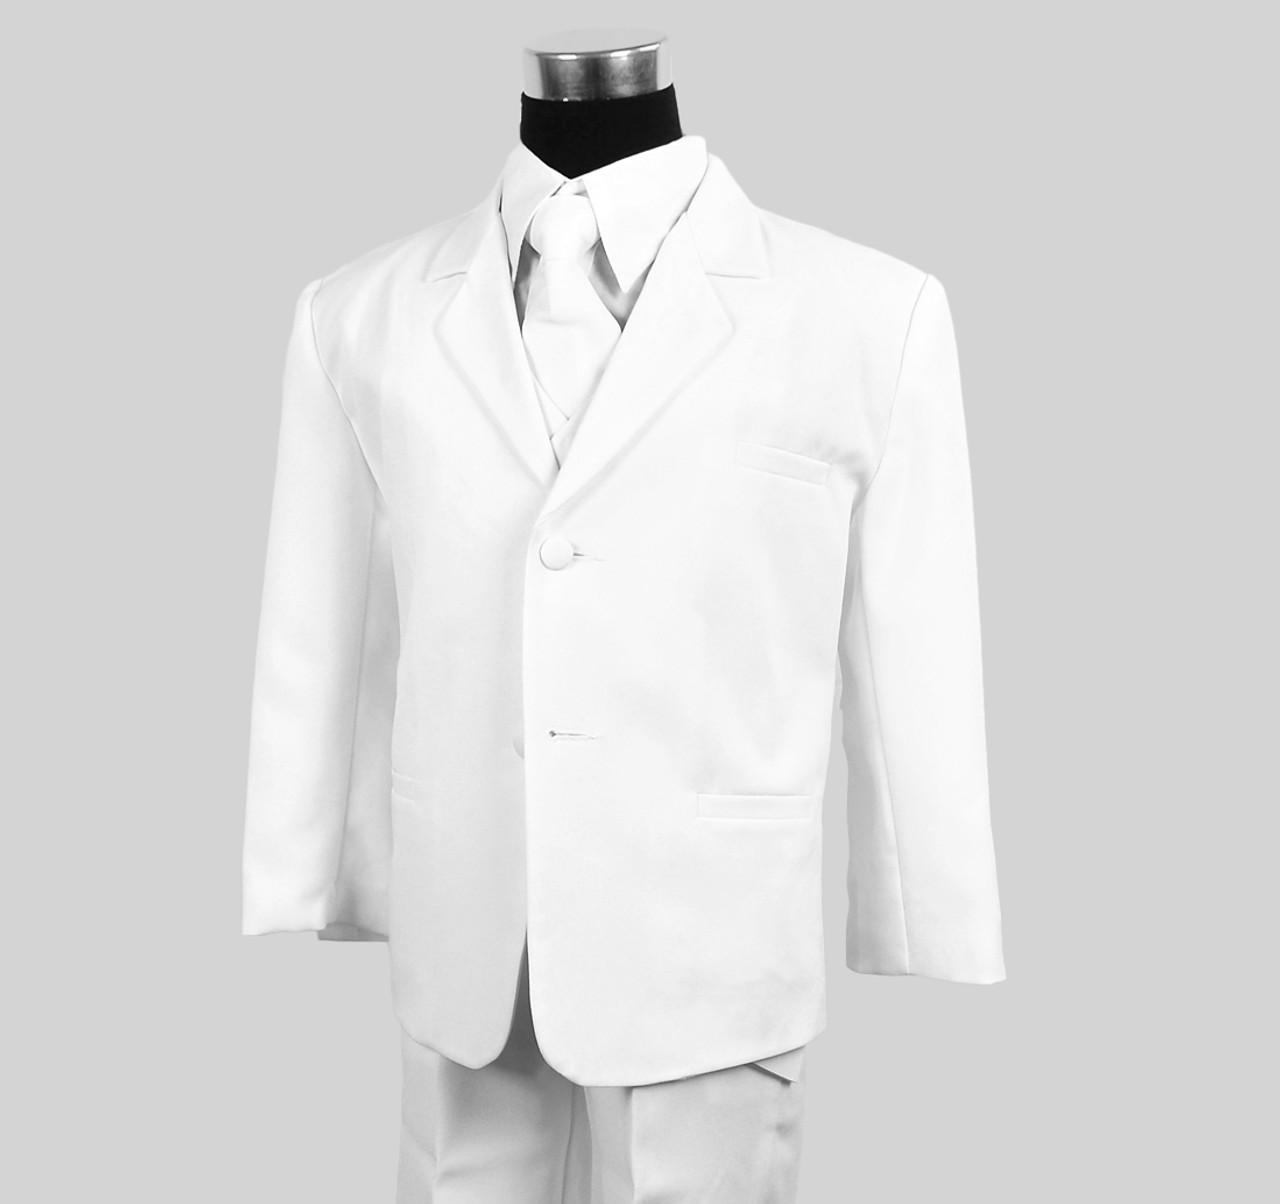 Boys White Suit with Tie dresswear Set ...